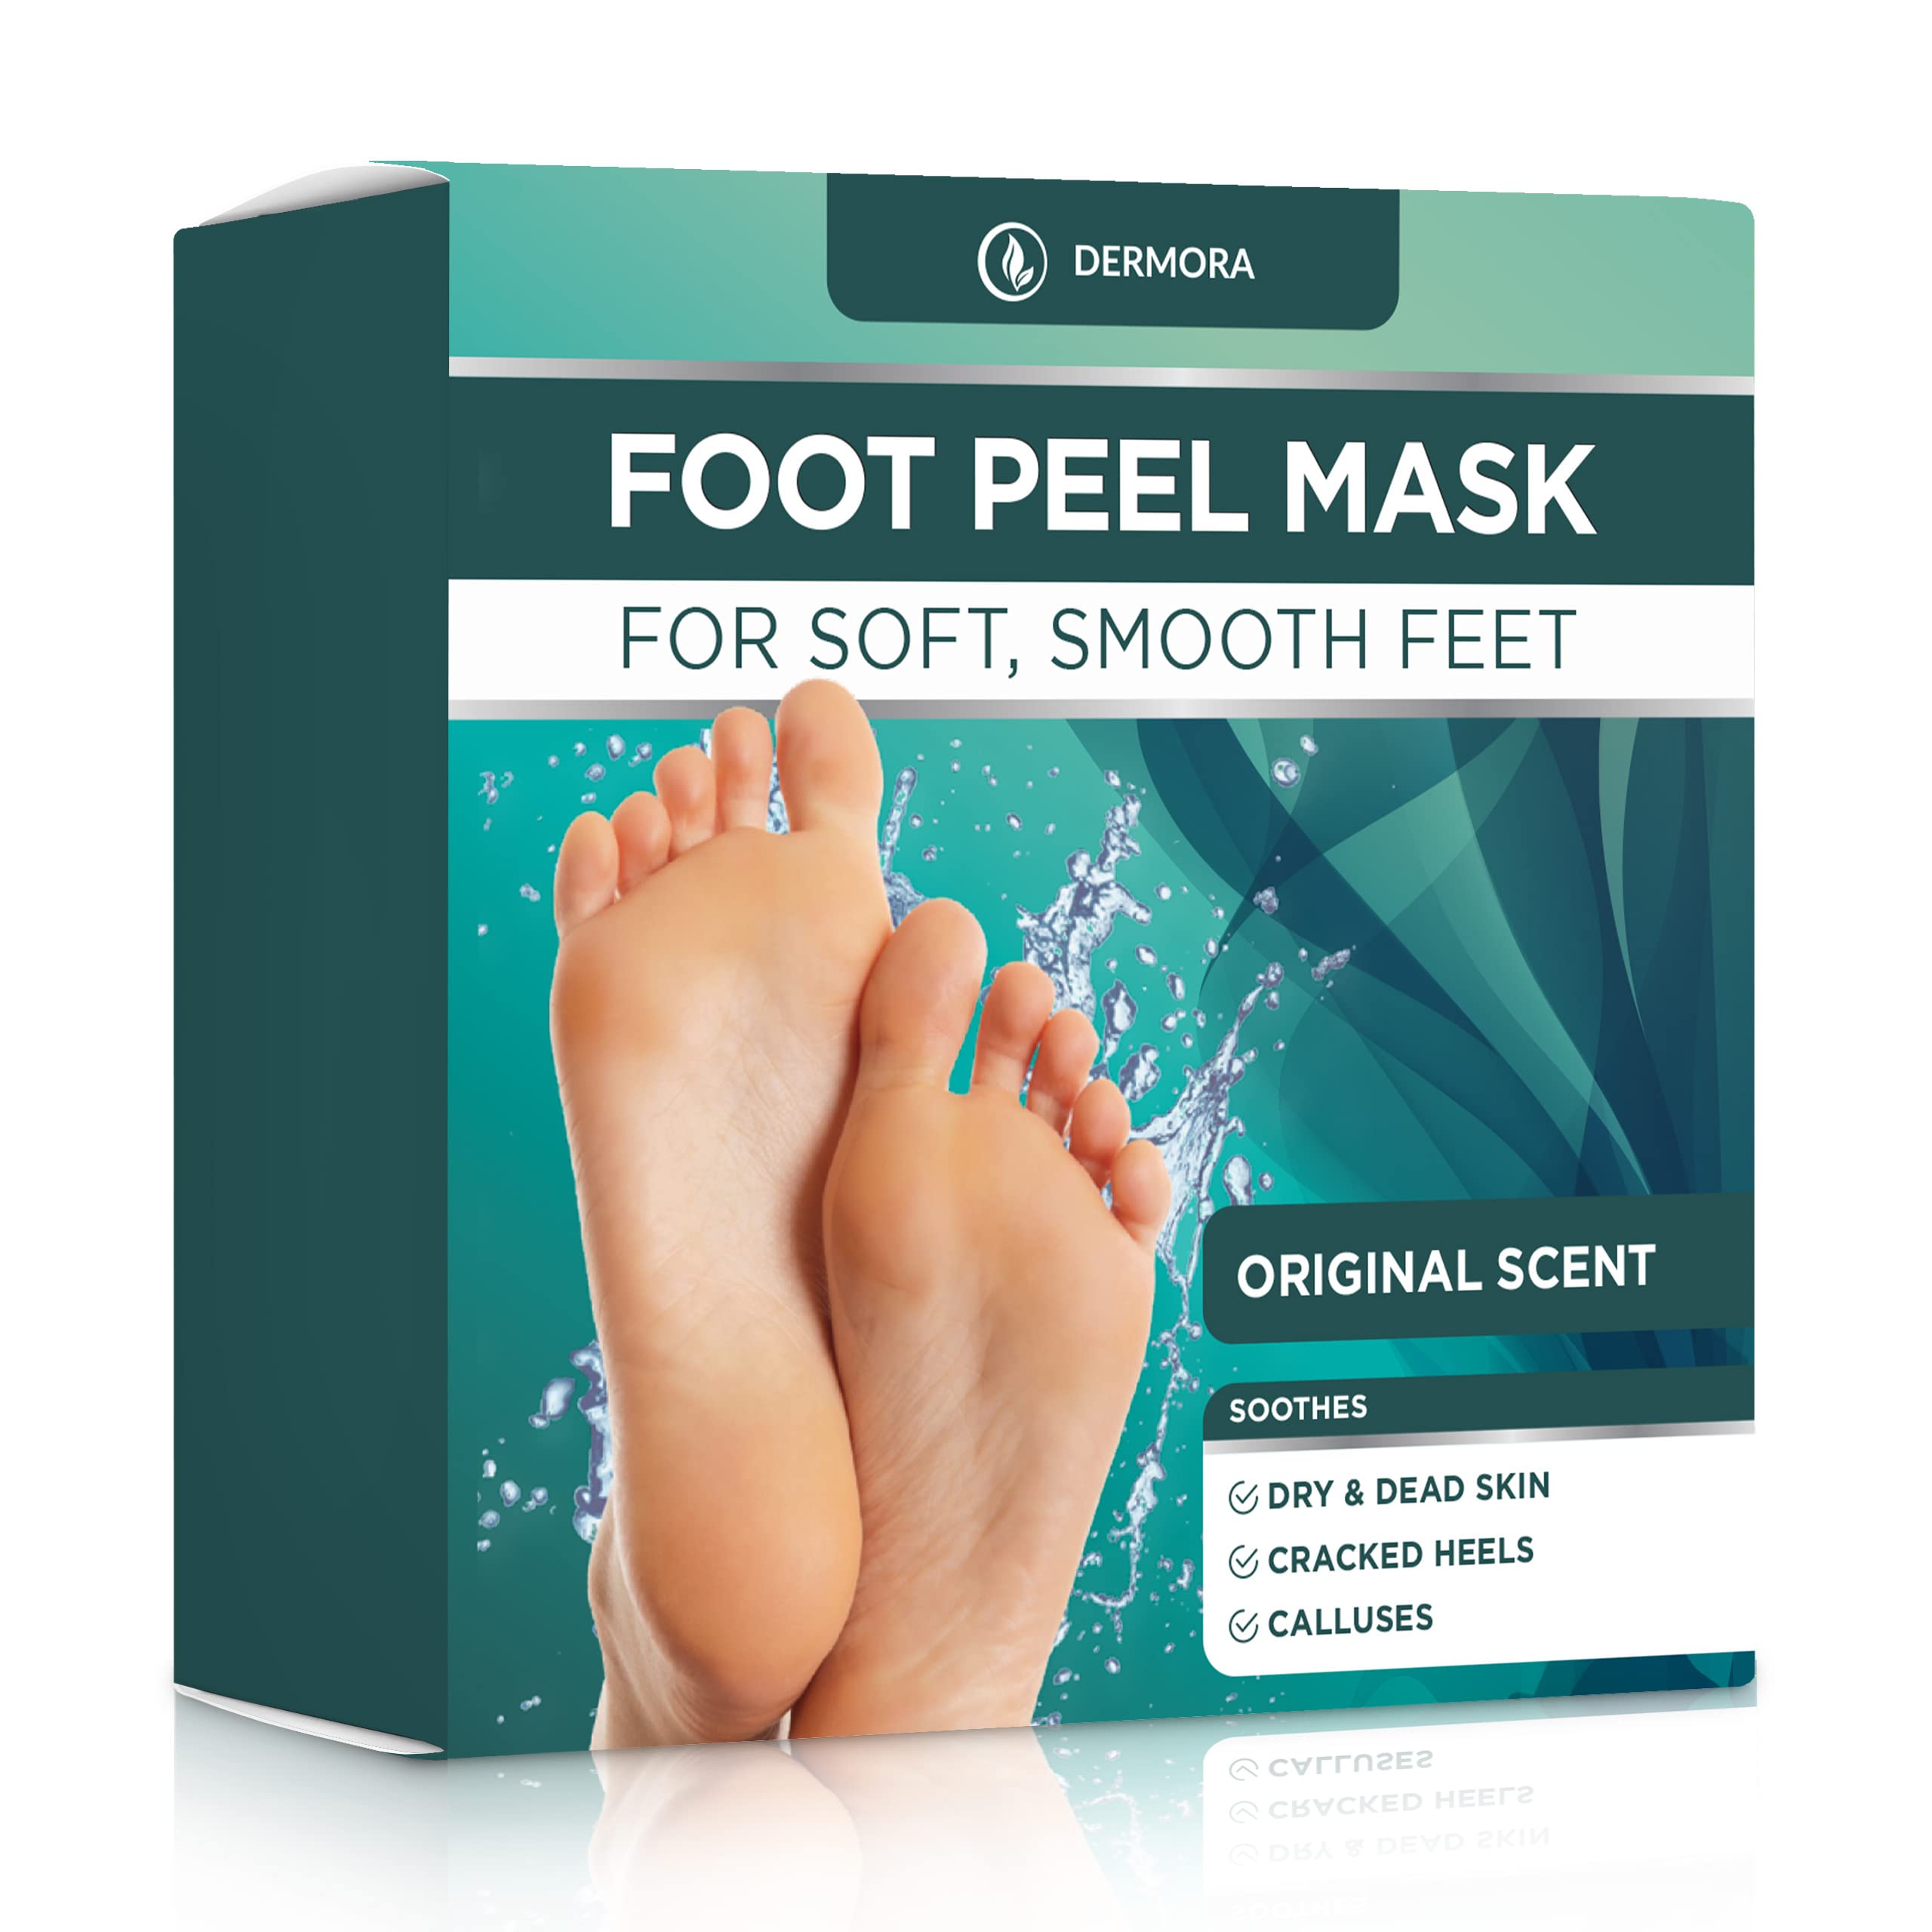 DERMORA Foot Peel Mask - 2 Pack of Regular Size Skin Exfoliating Foot Masks for Dry, Cracked Feet, Callus, Dead Skin Remover - Feet Peeling Mask for baby soft feet, Original Scent